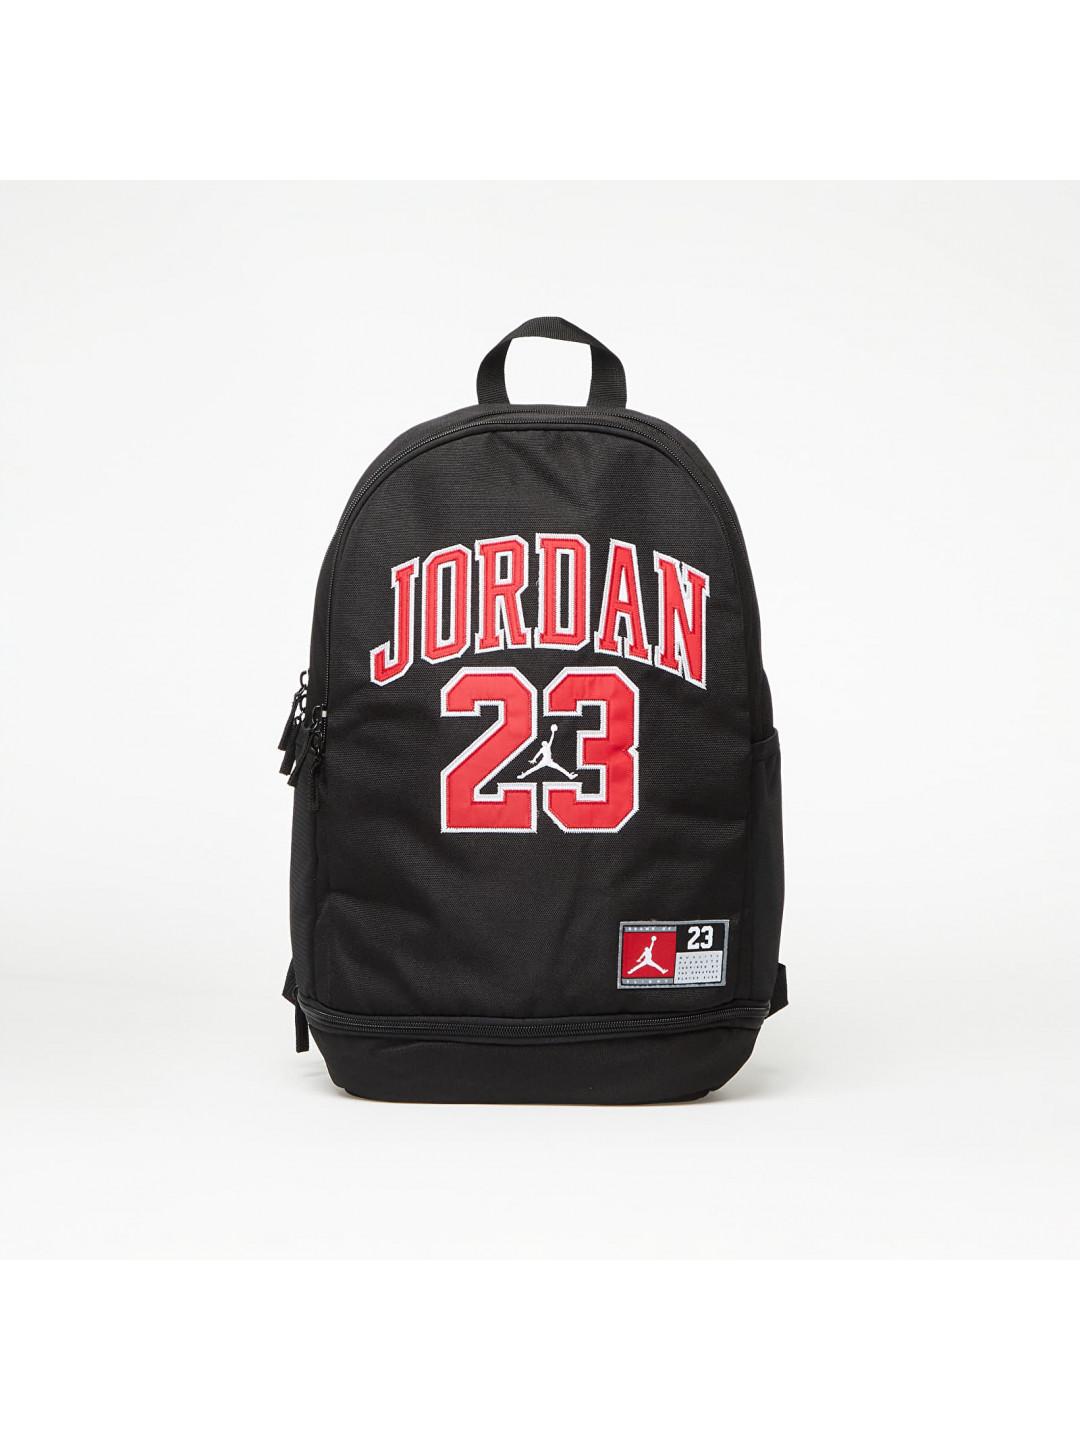 Jordan Jersey Backpack Black